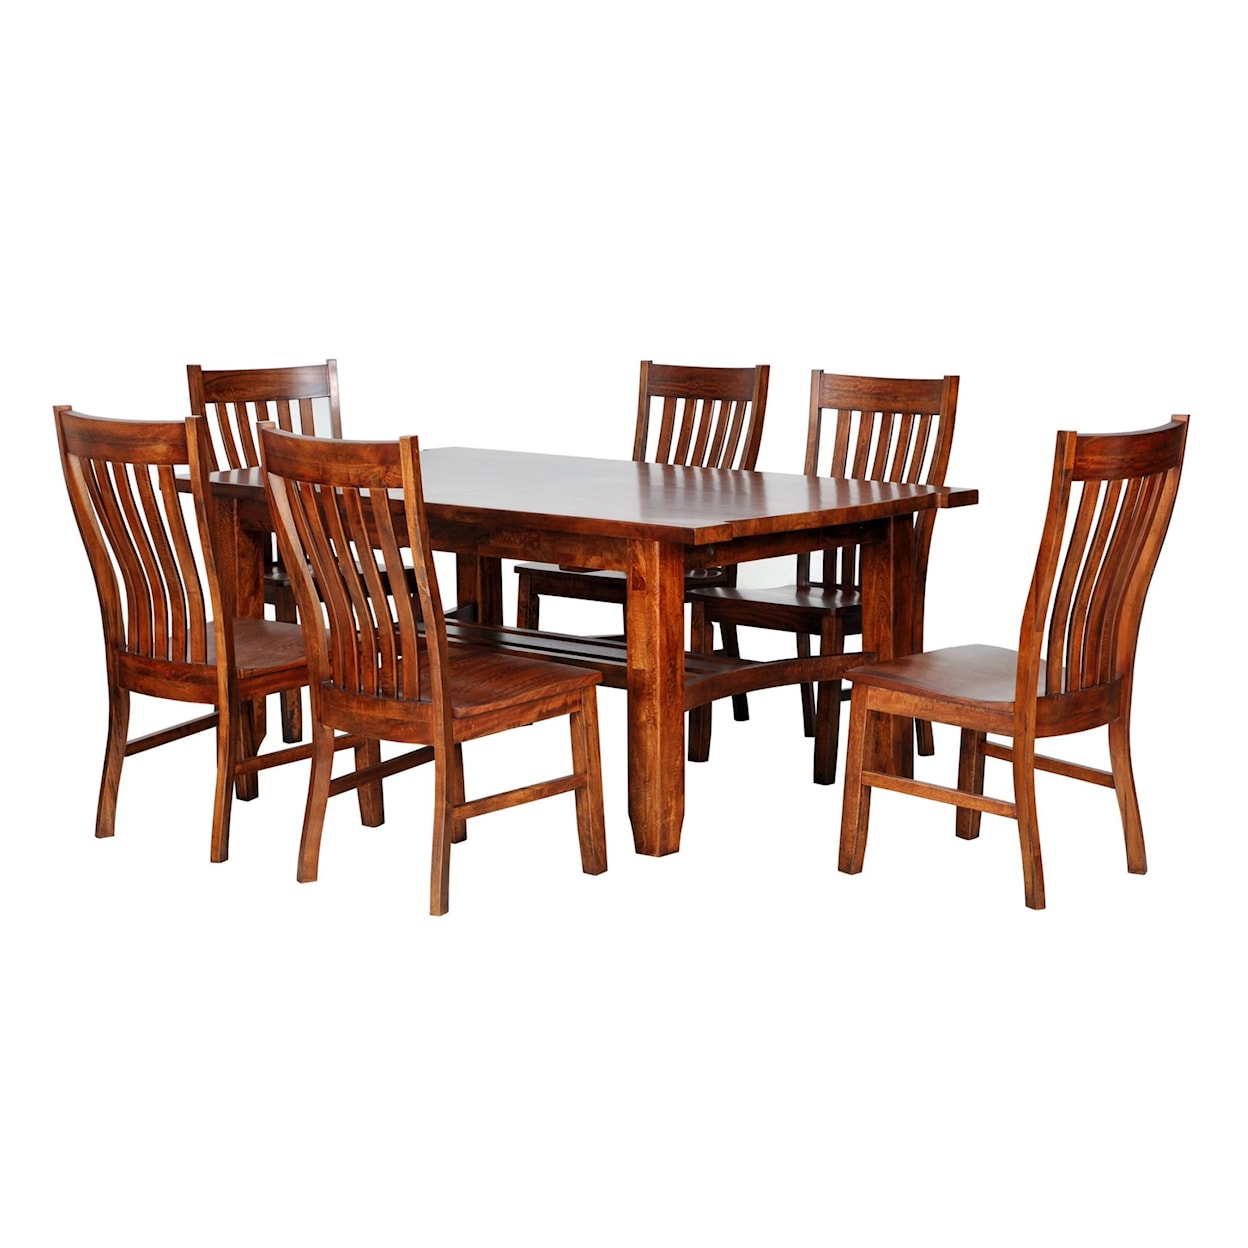 Napa Furniture Design Whistler Retreat Dining Table